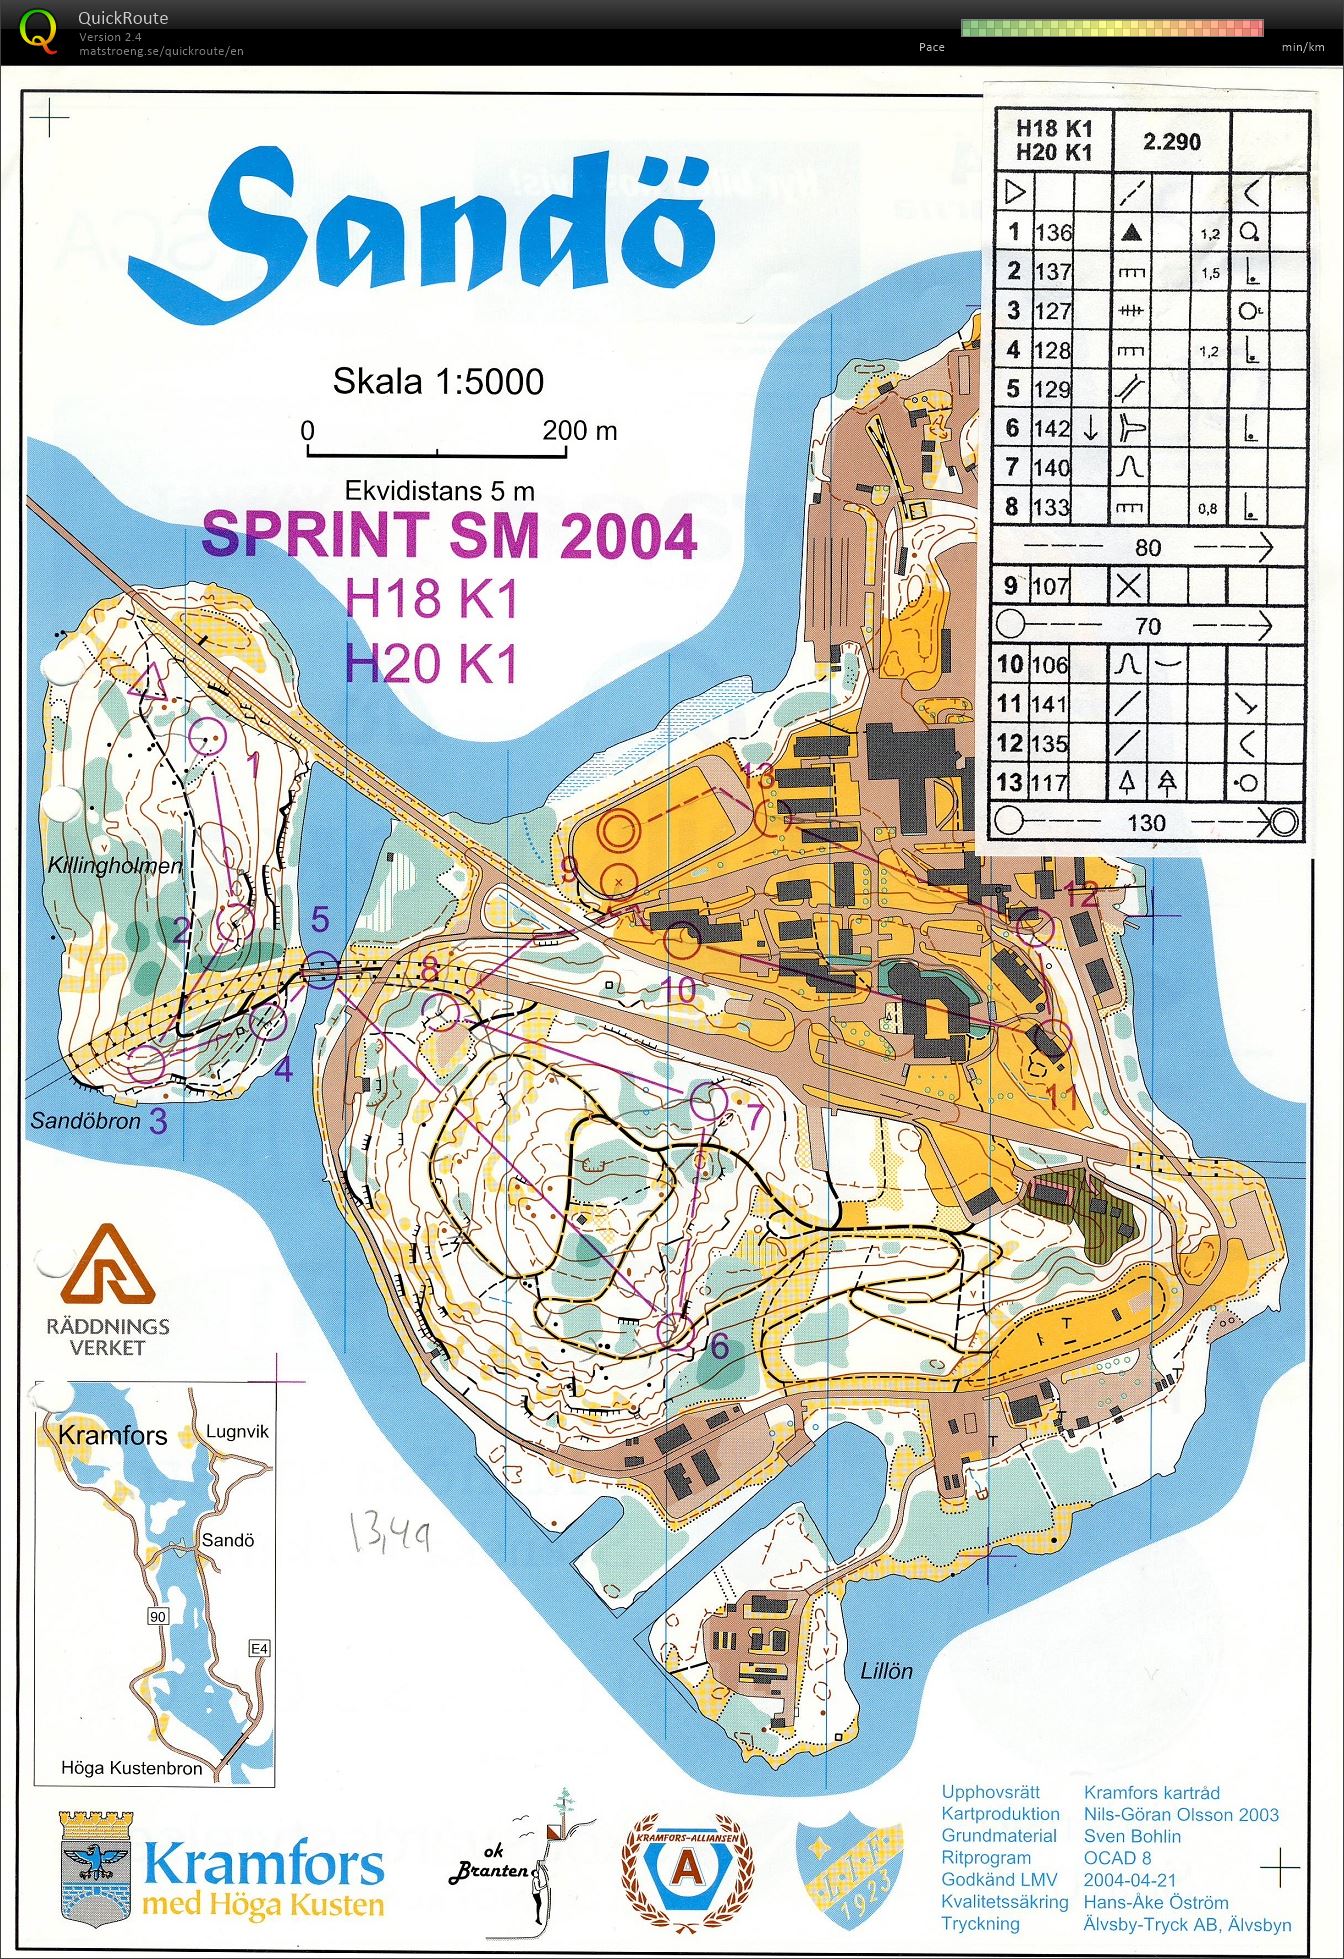 Sprint-SM, kval (29/05/2004)